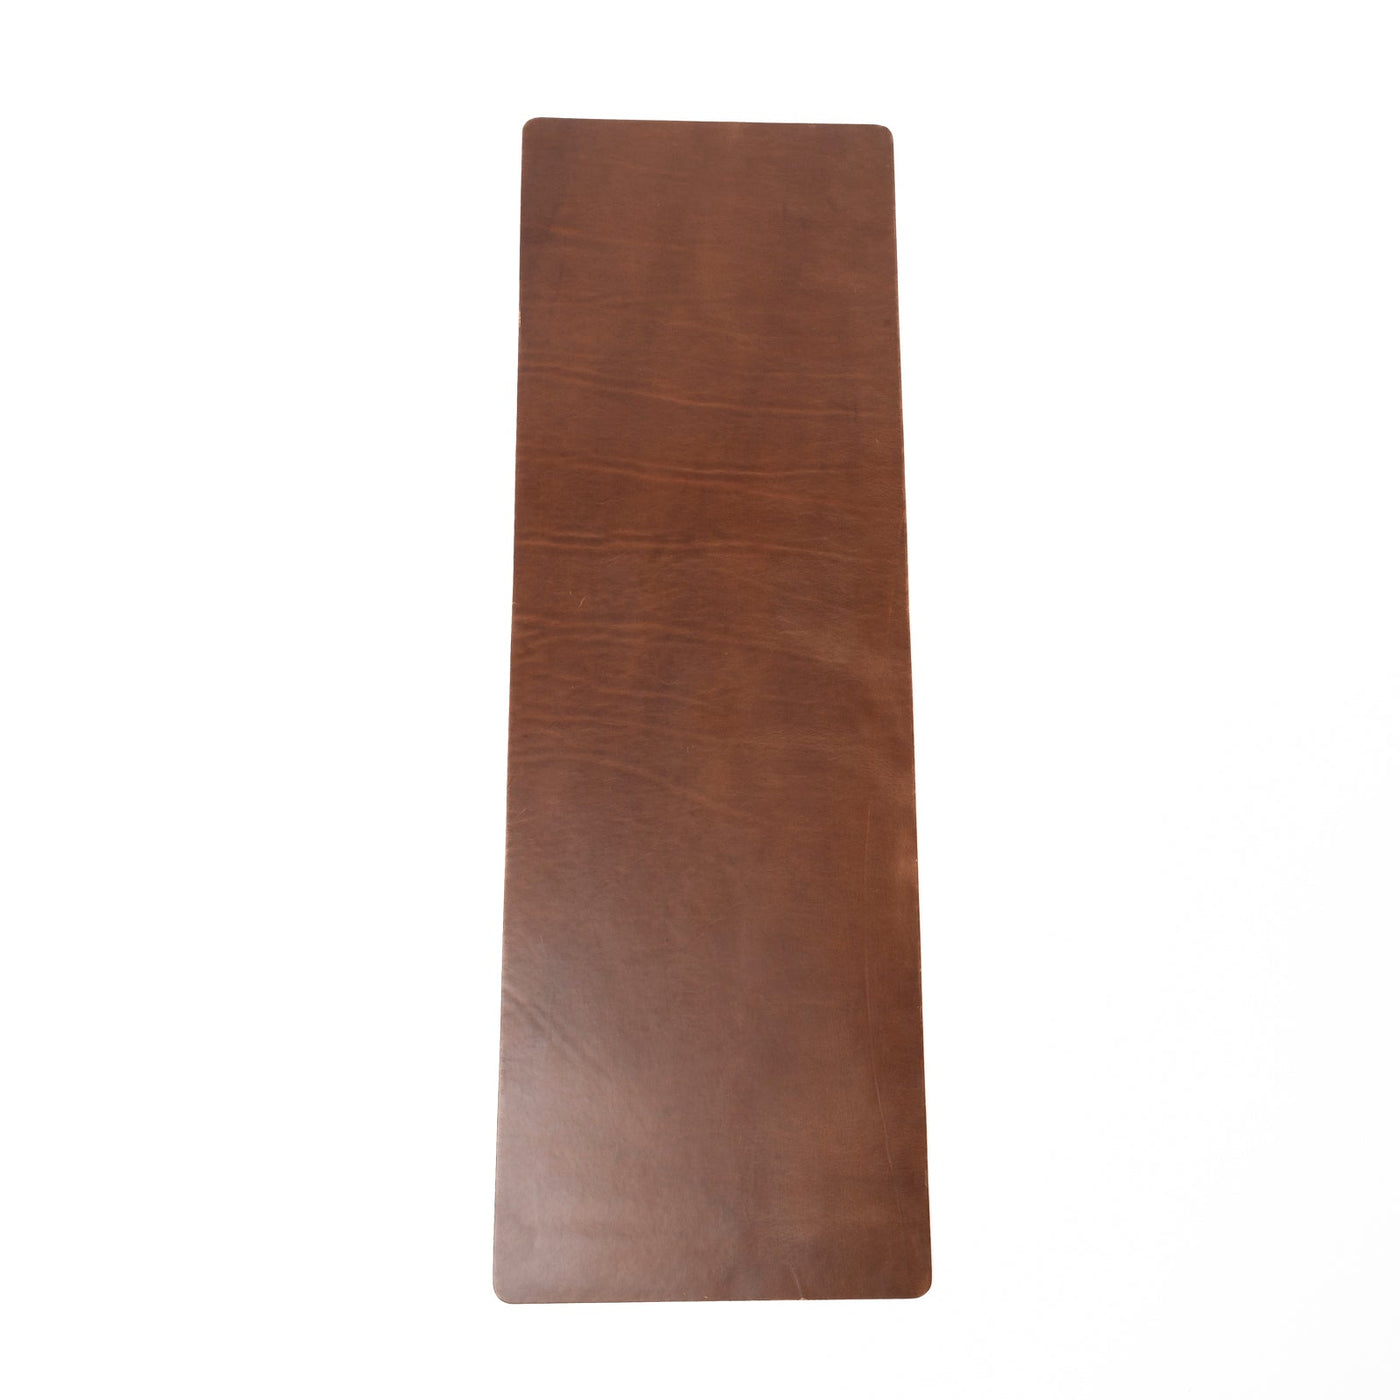 Leather Desk Pad - Natural Popov Leather